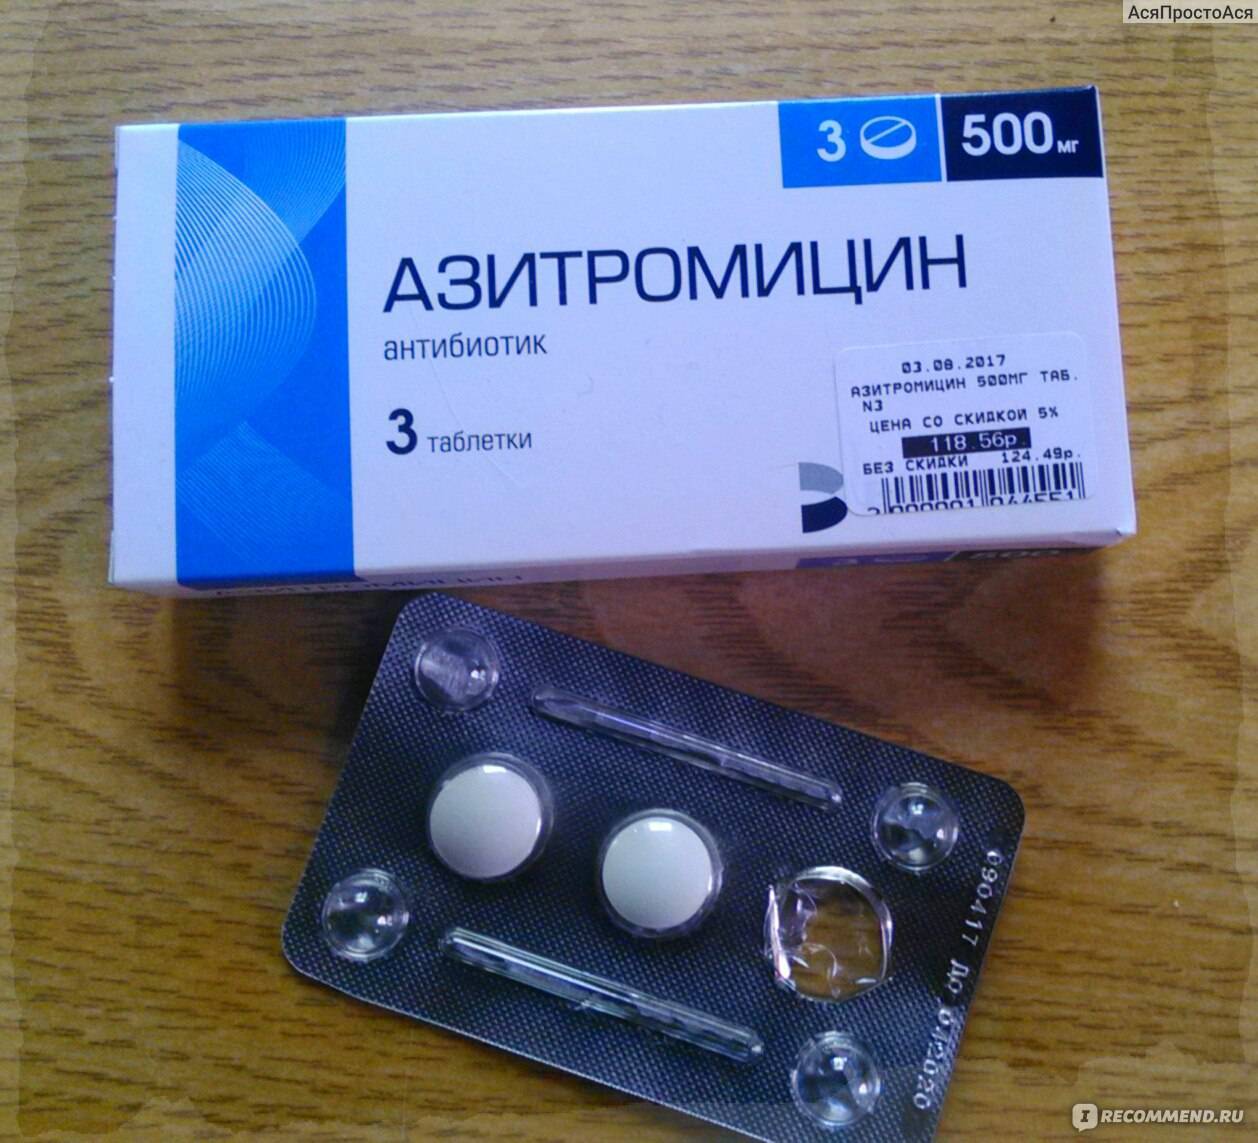 Антибиотик на букву с. Антибиотик три таблетки Азитромицин. Таблетки 3 шт антибиотики Азитромицин. Три таблетки от простуды антибиотик Азитромицин. Антибиотик azithromycin 500.